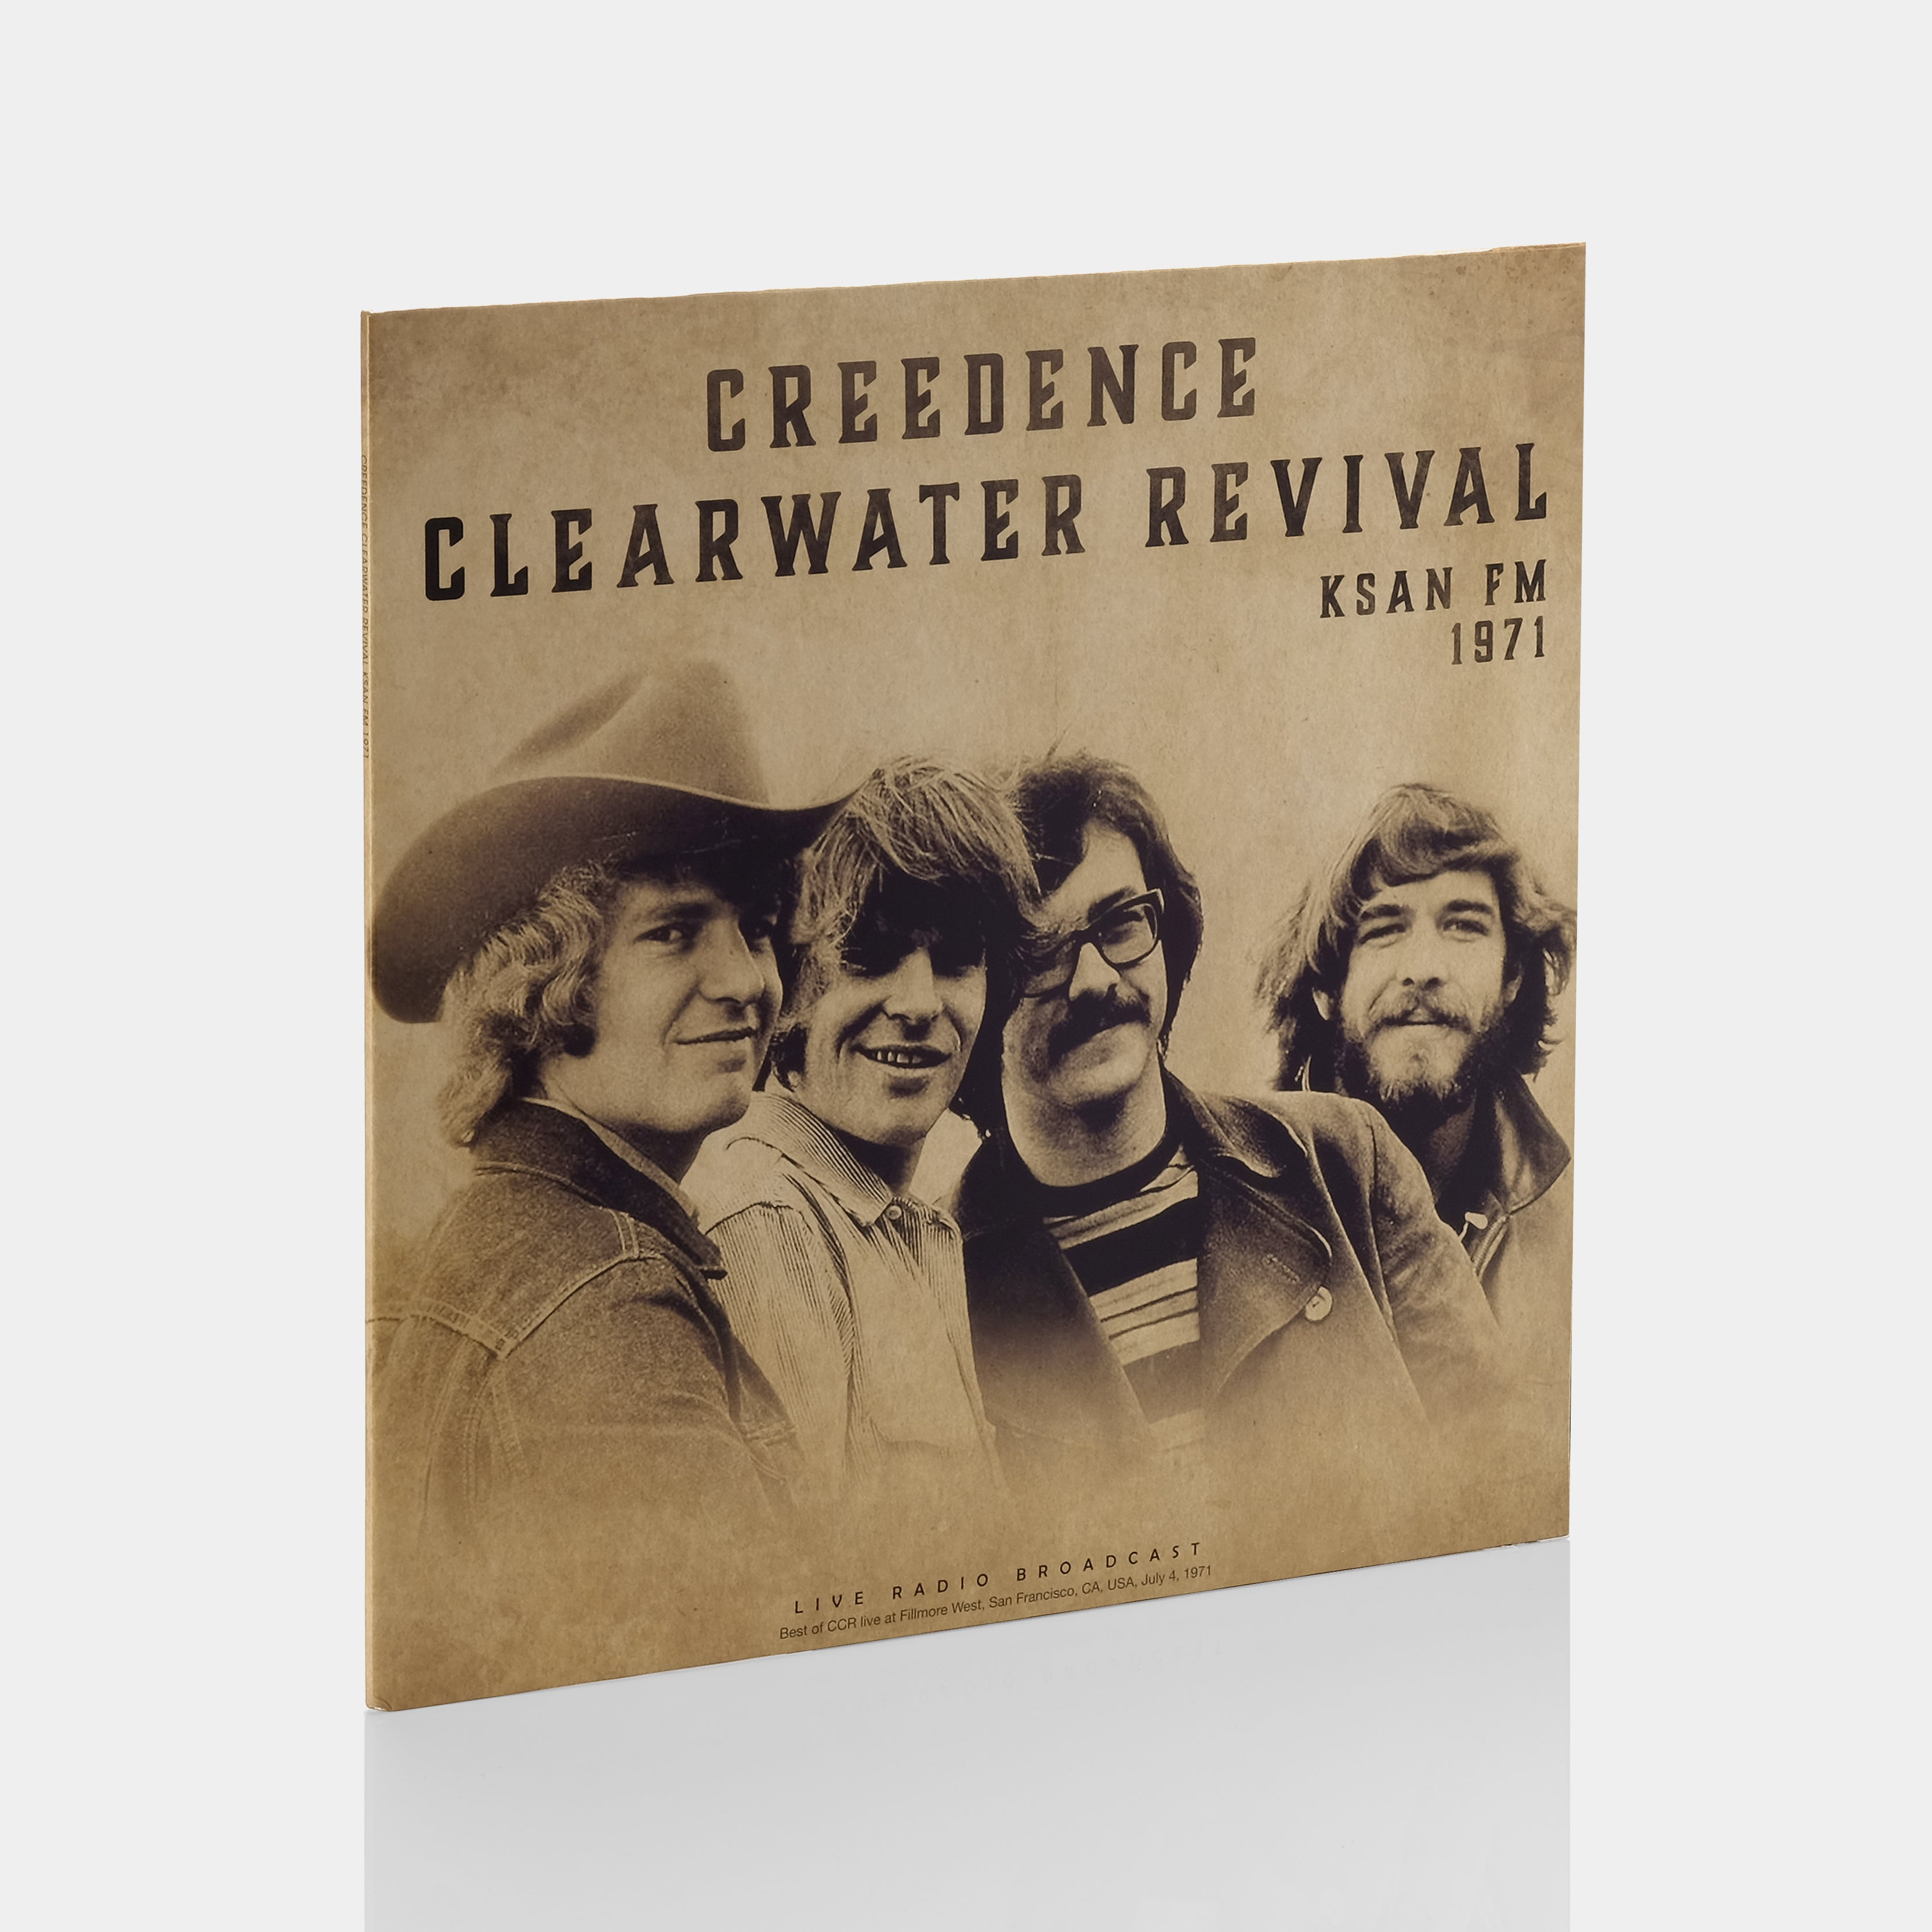 Creedence Clearwater Revival - KSAN FM 1971 LP Vinyl Record